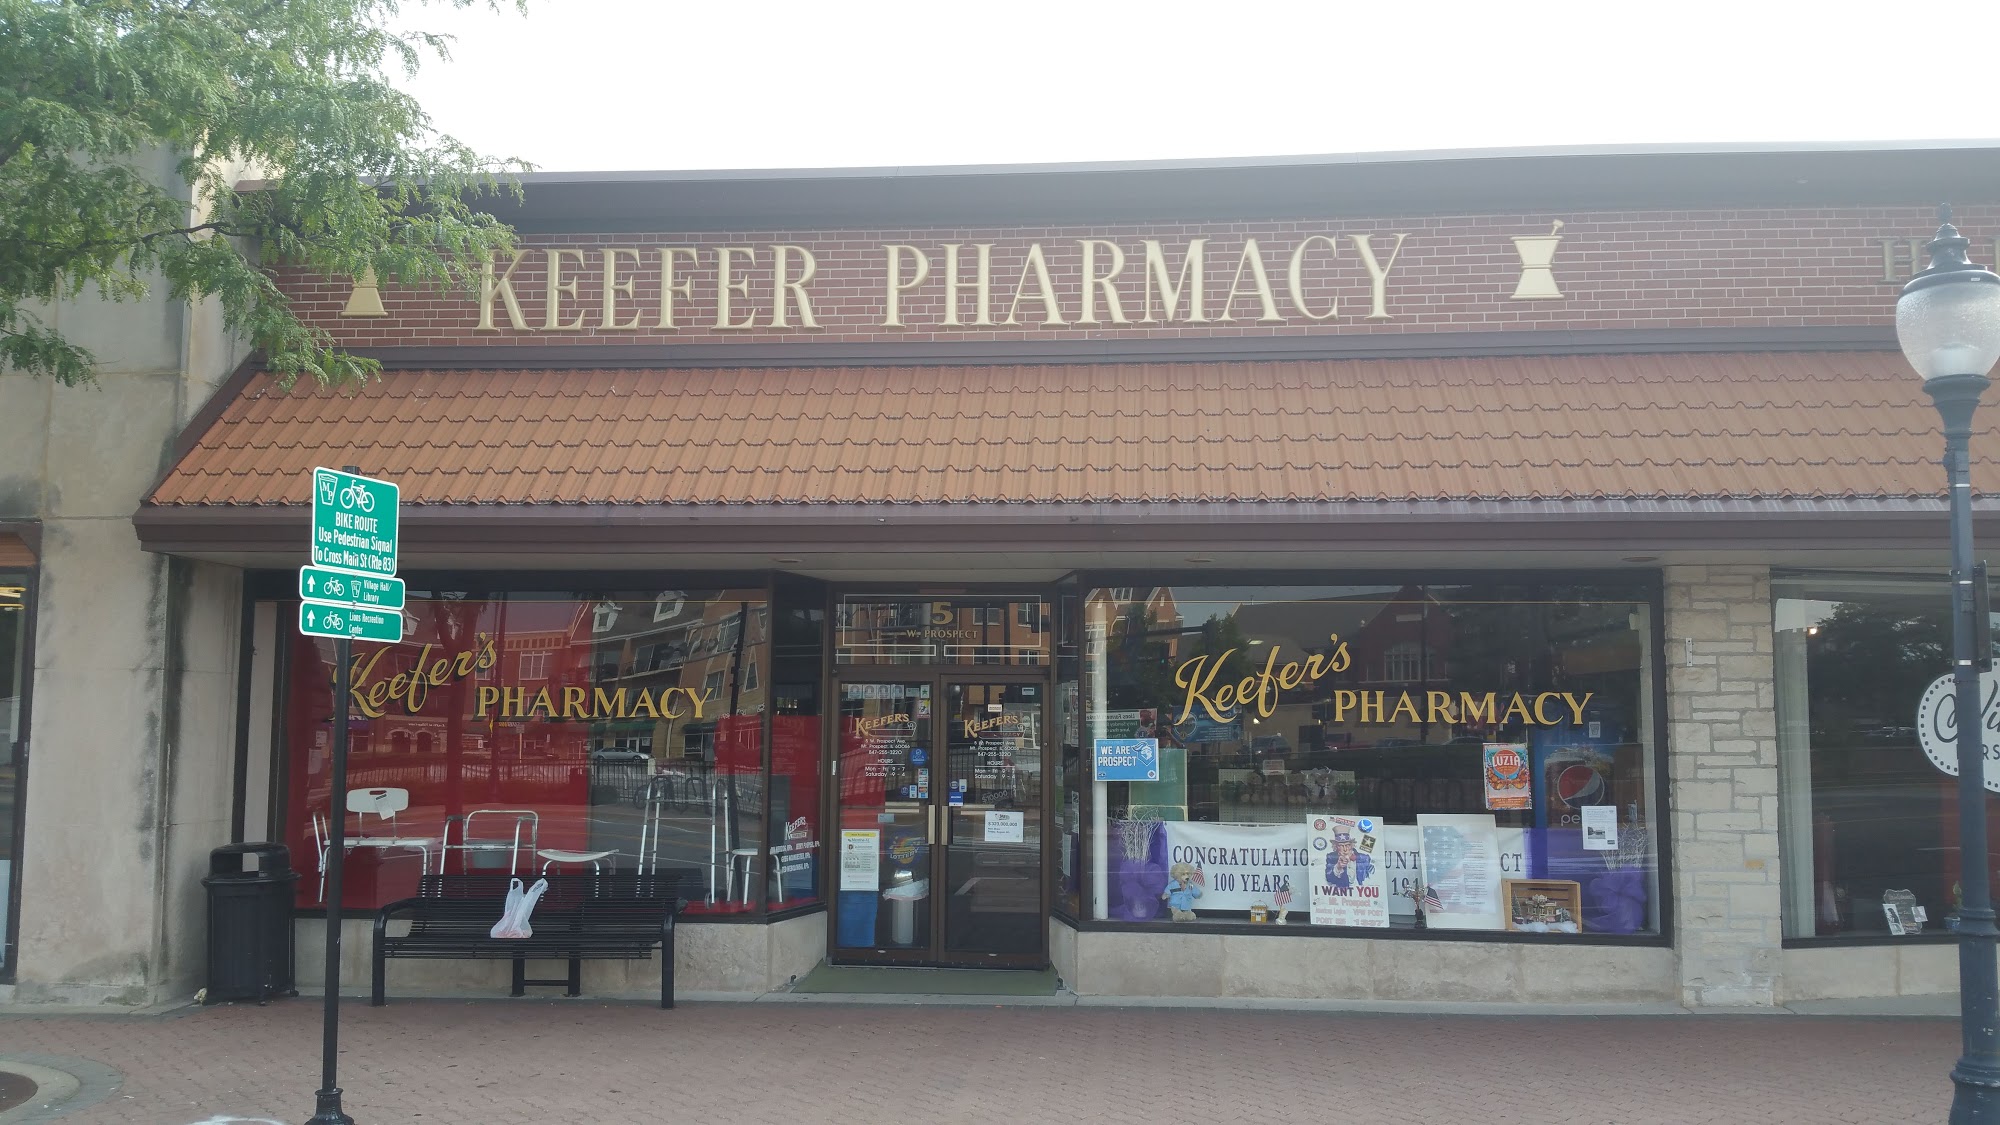 Keefer's Pharmacy